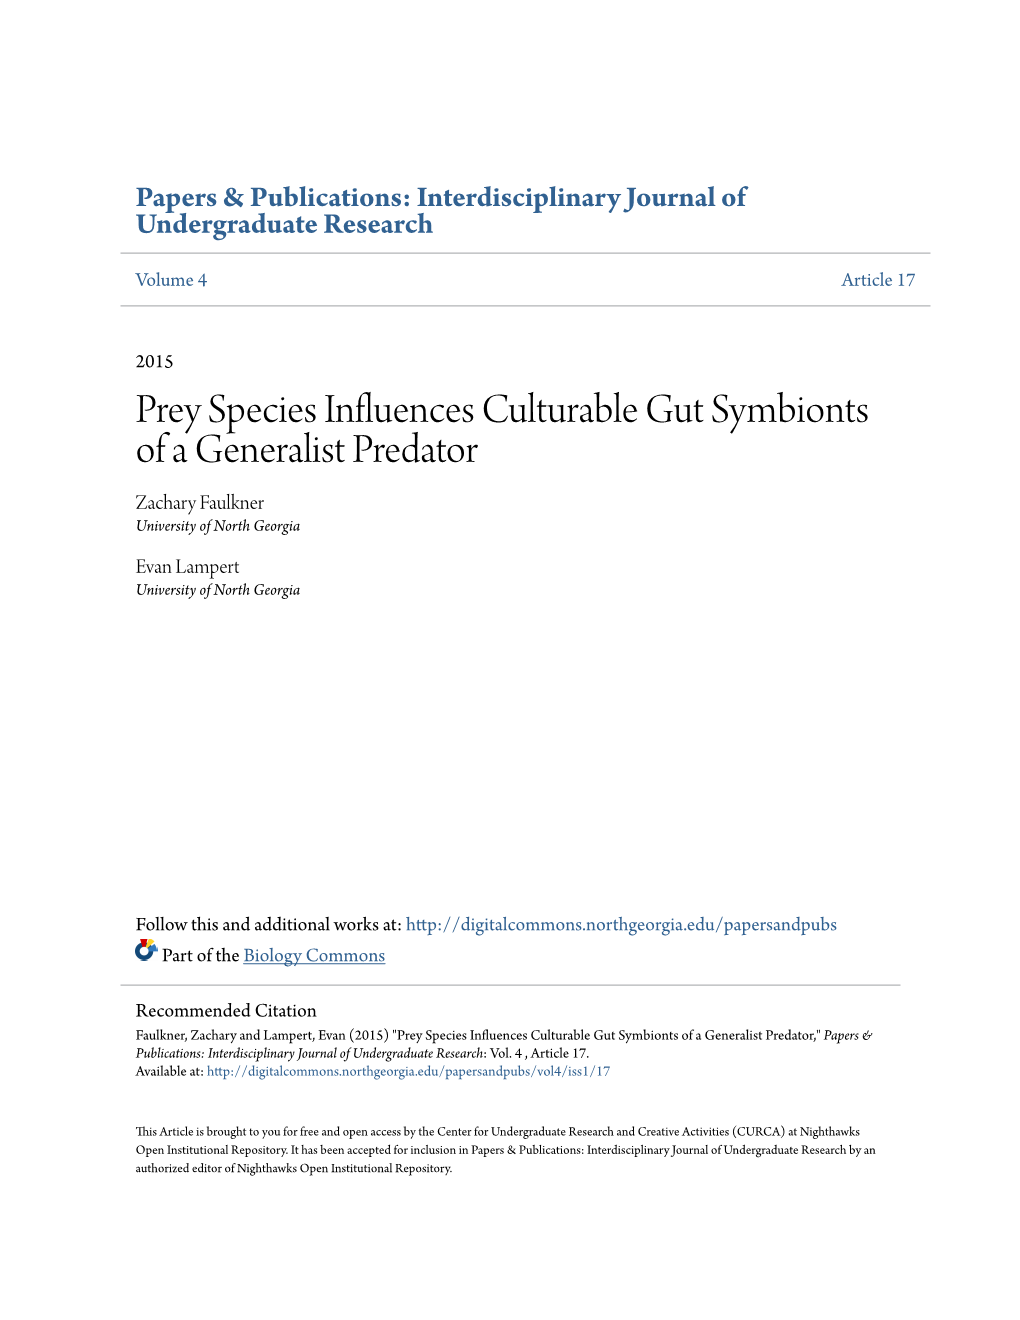 Prey Species Influences Culturable Gut Symbionts of a Generalist Predator Zachary Faulkner University of North Georgia